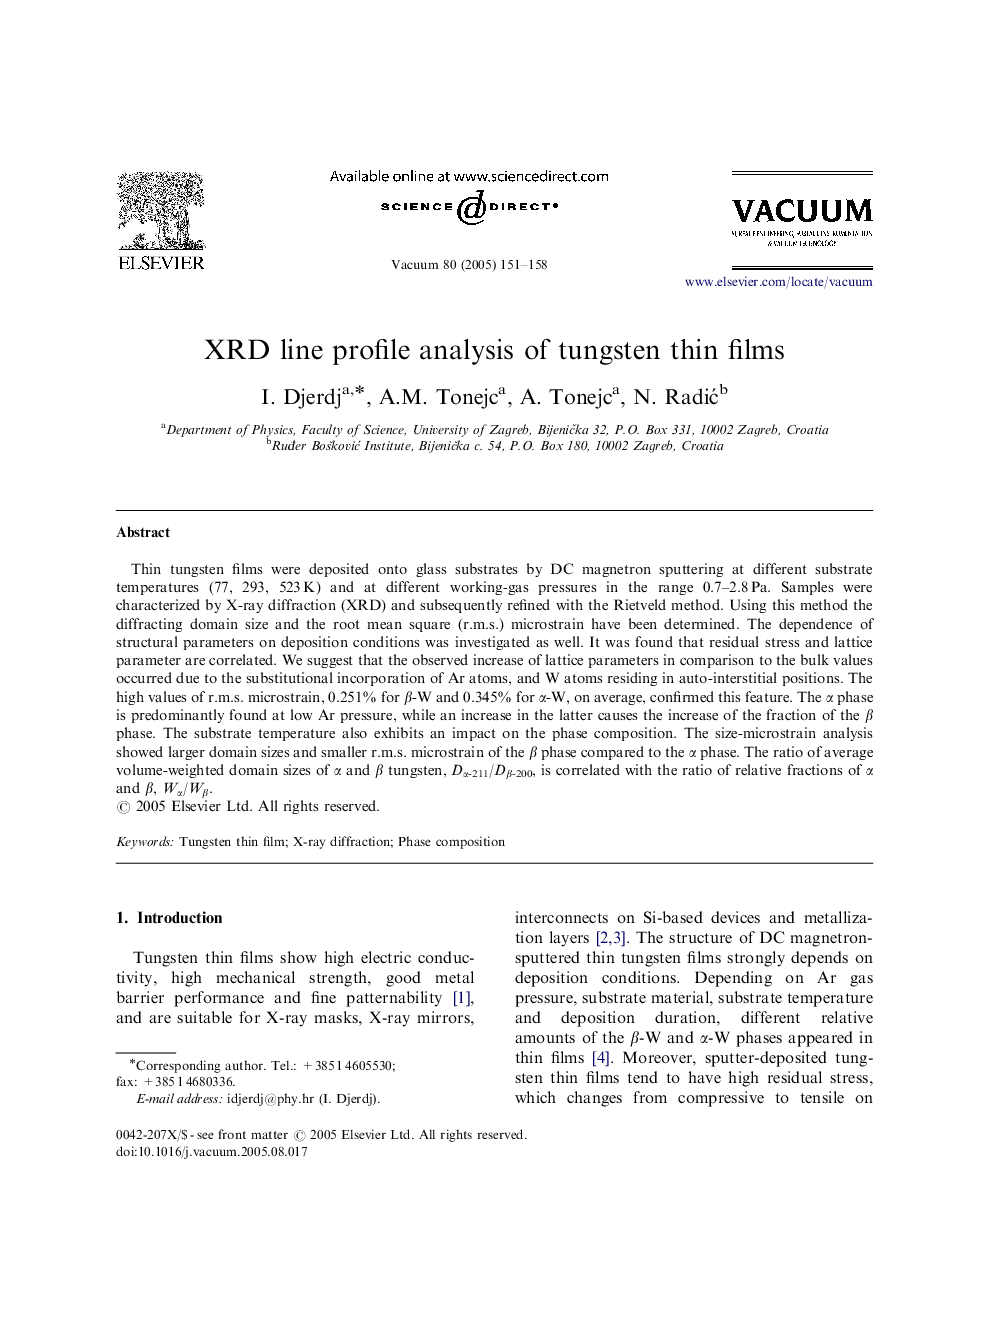 XRD line profile analysis of tungsten thin films